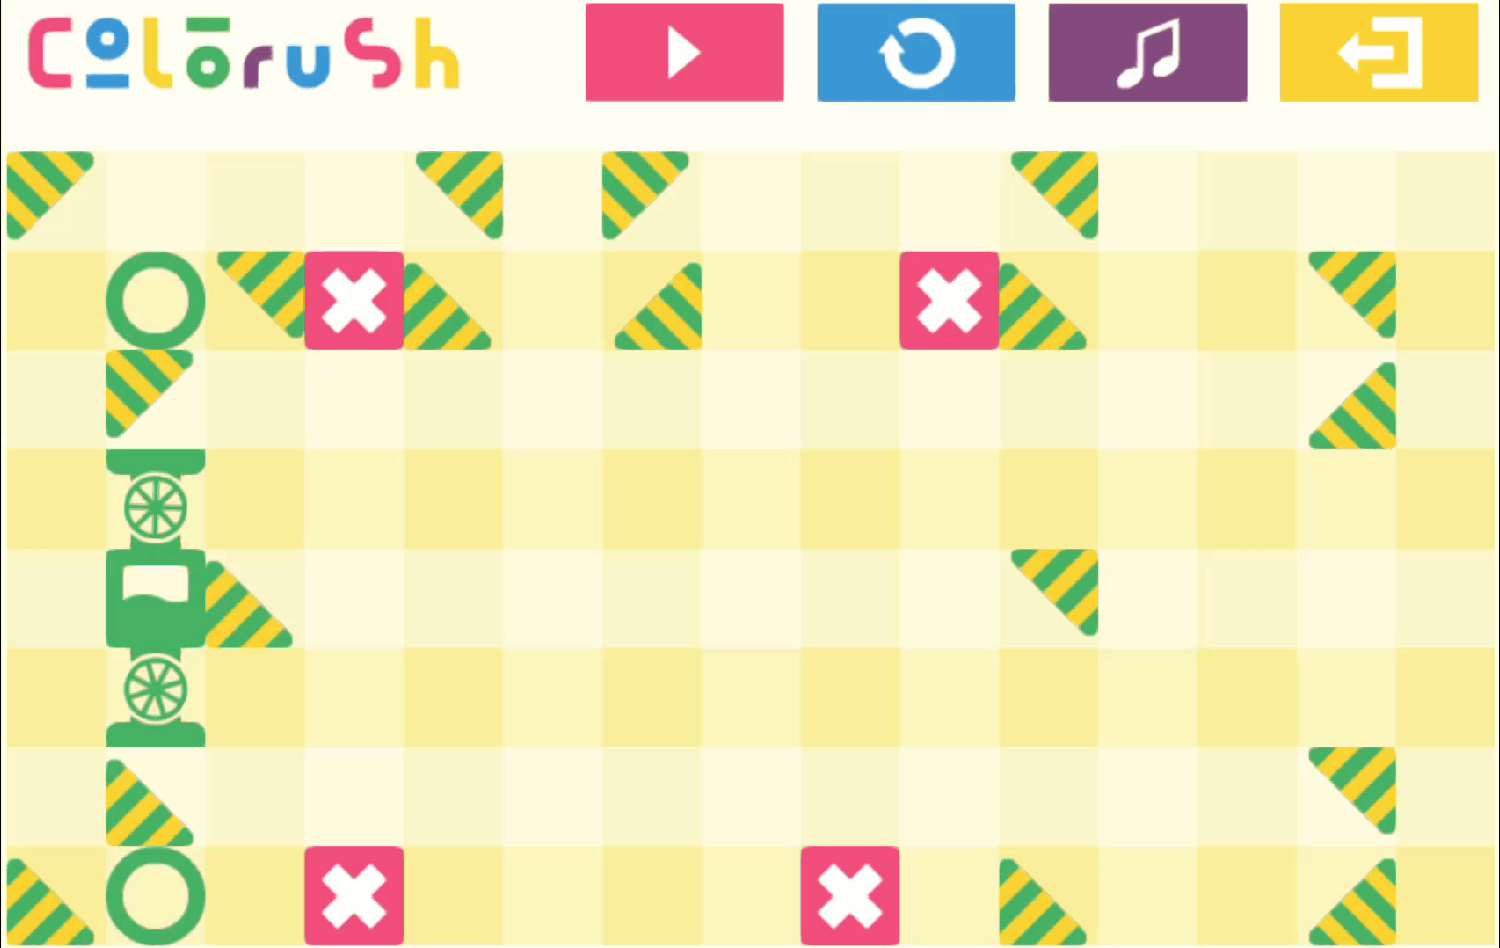 Colorush Game Level 7 Screenshot.